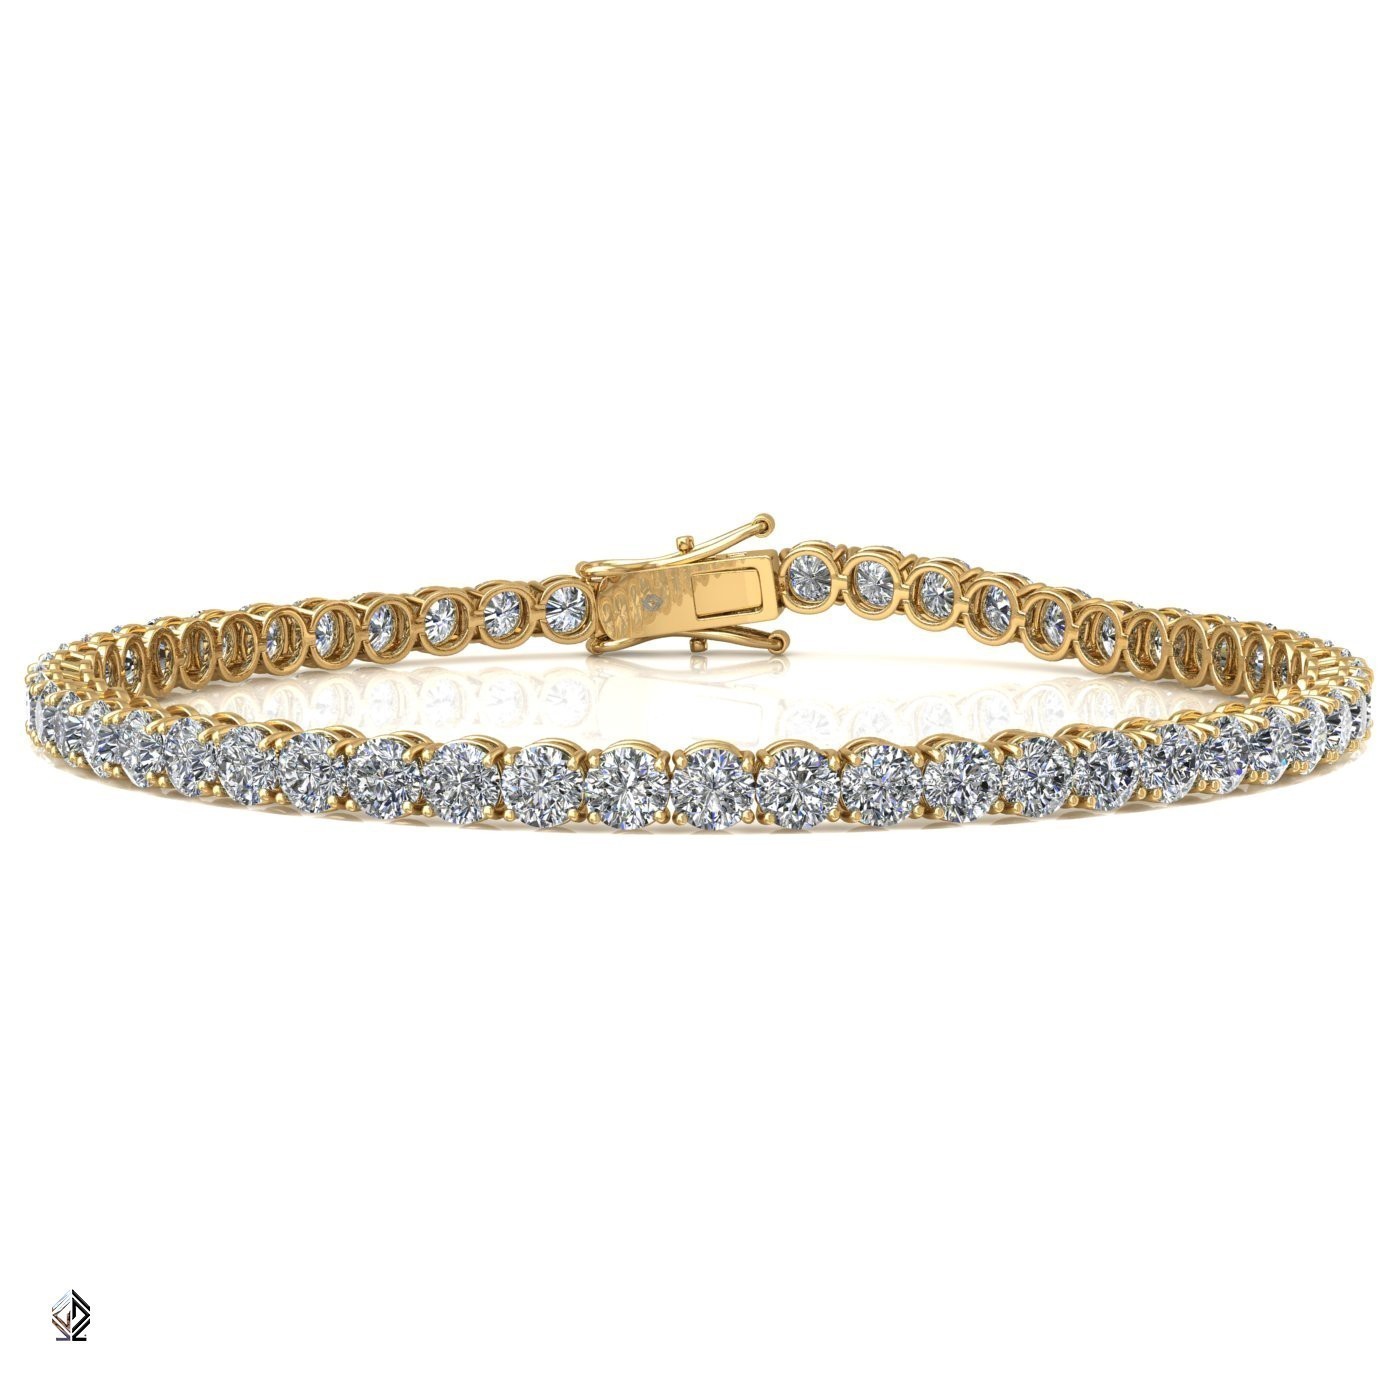 18k yellow gold 2.6mm 4 prong round shape diamond tennis bracelet in round setting